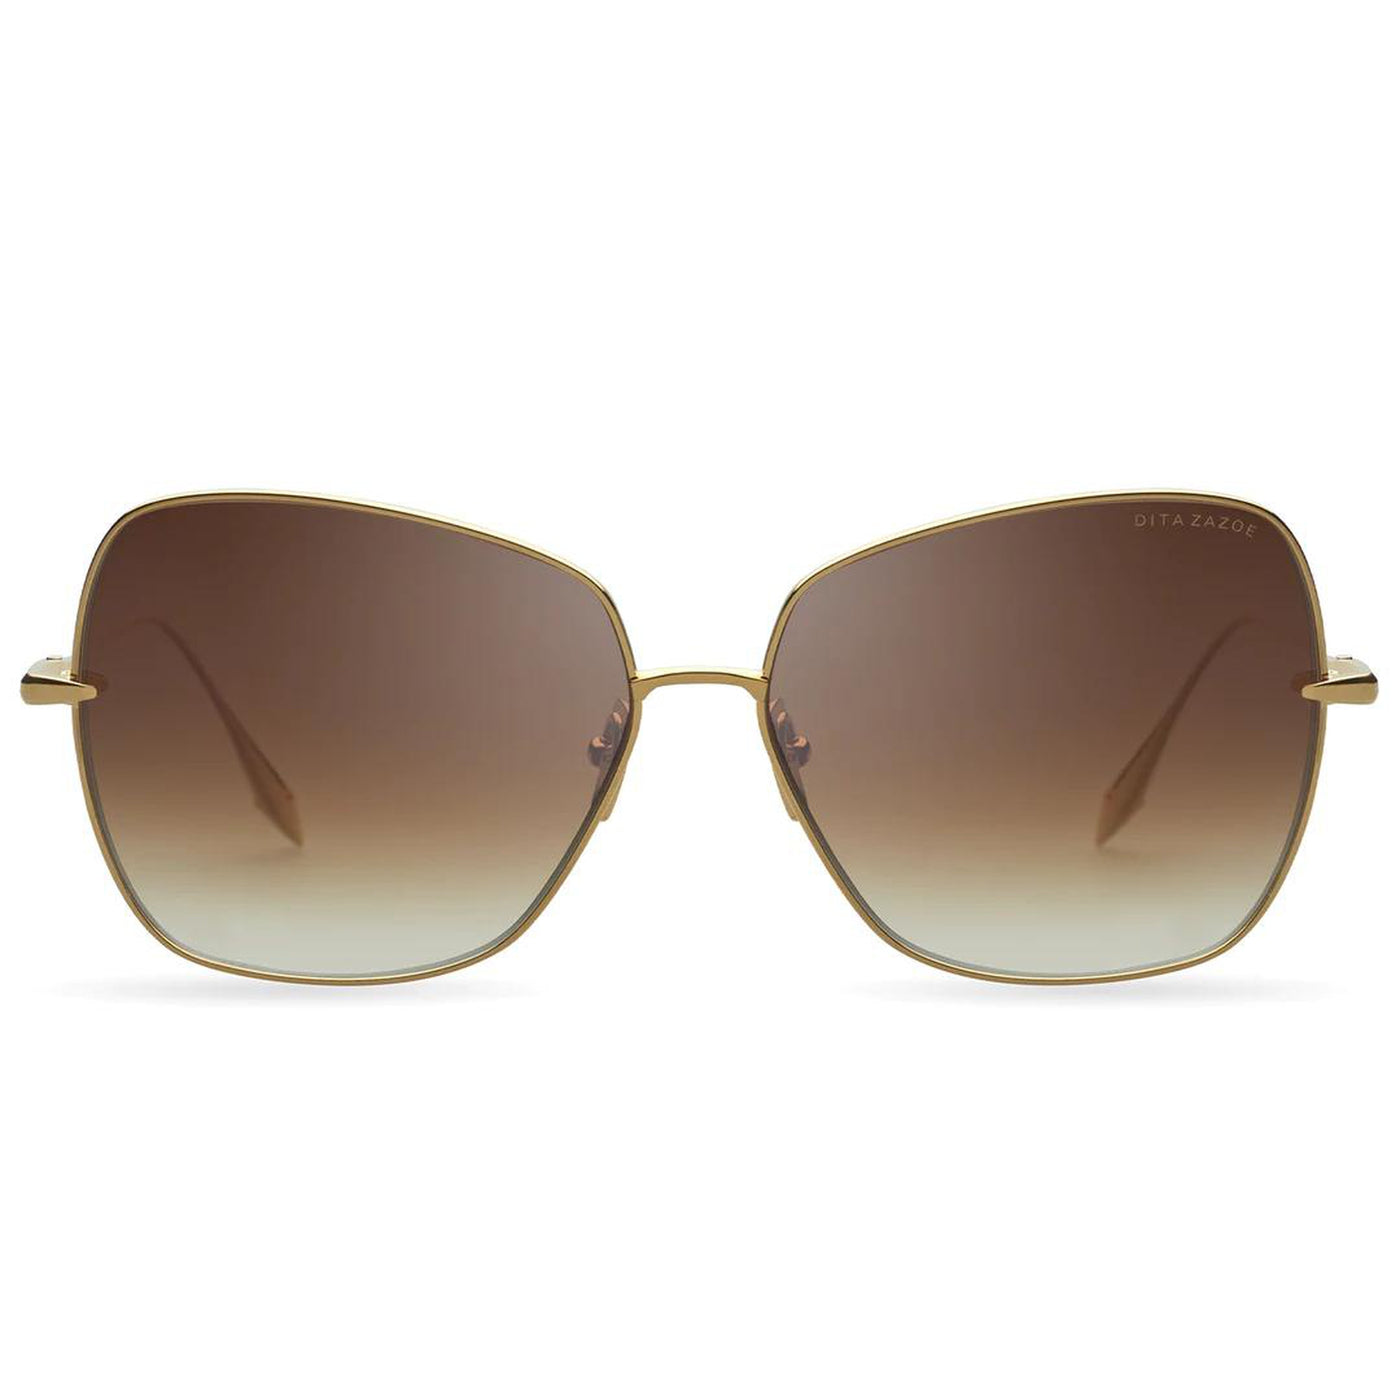 DITA ZAZOE-Sunglasses-Topline Eyewear